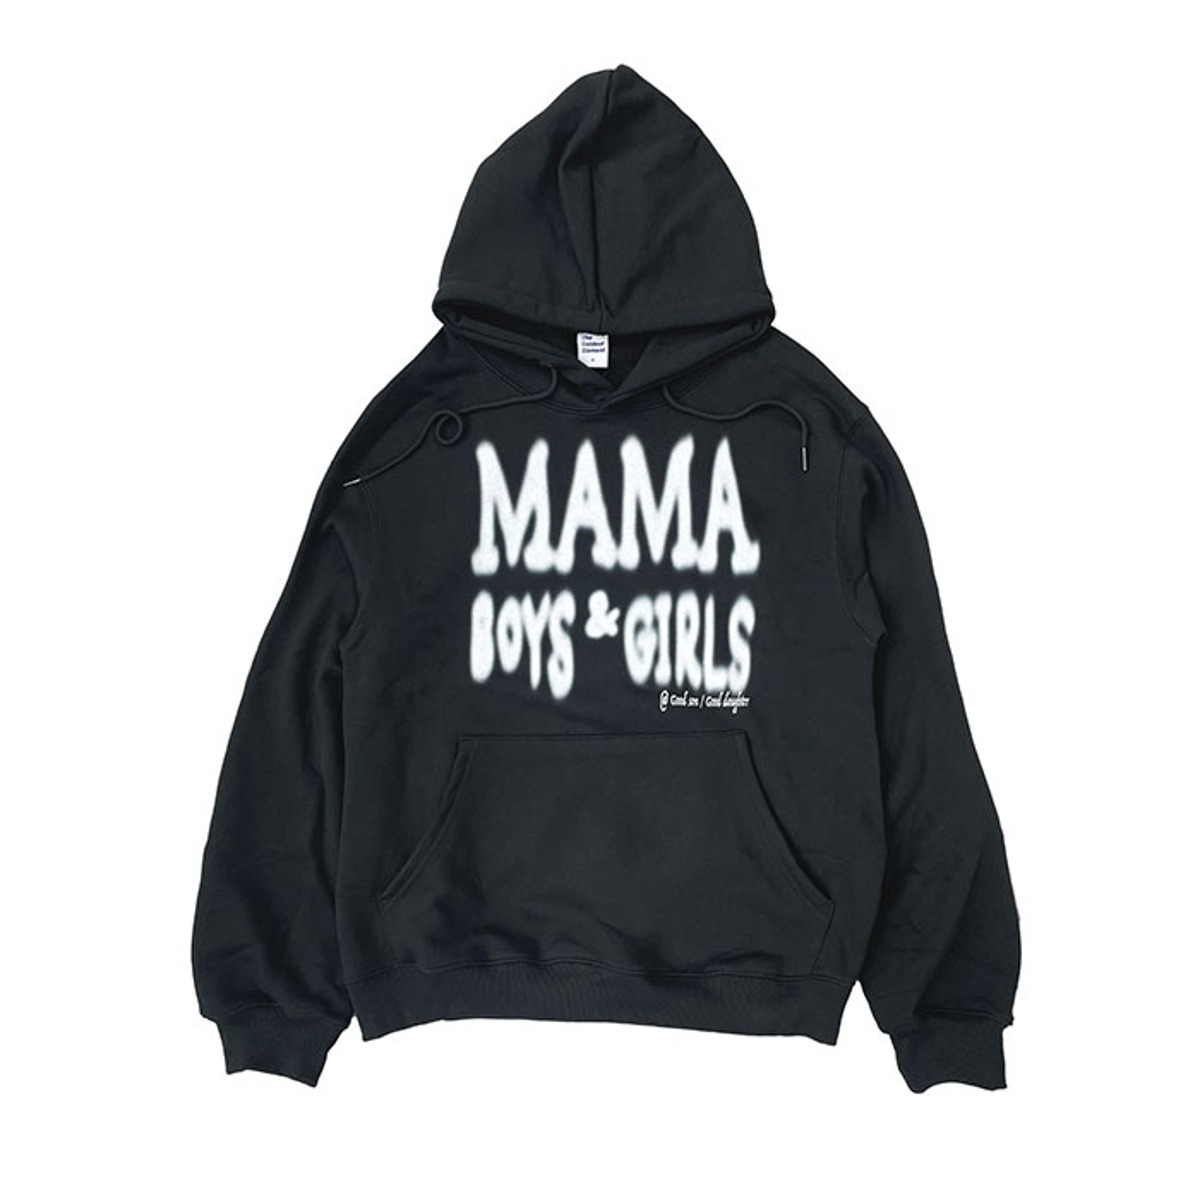 TCM mama hoodie (black)